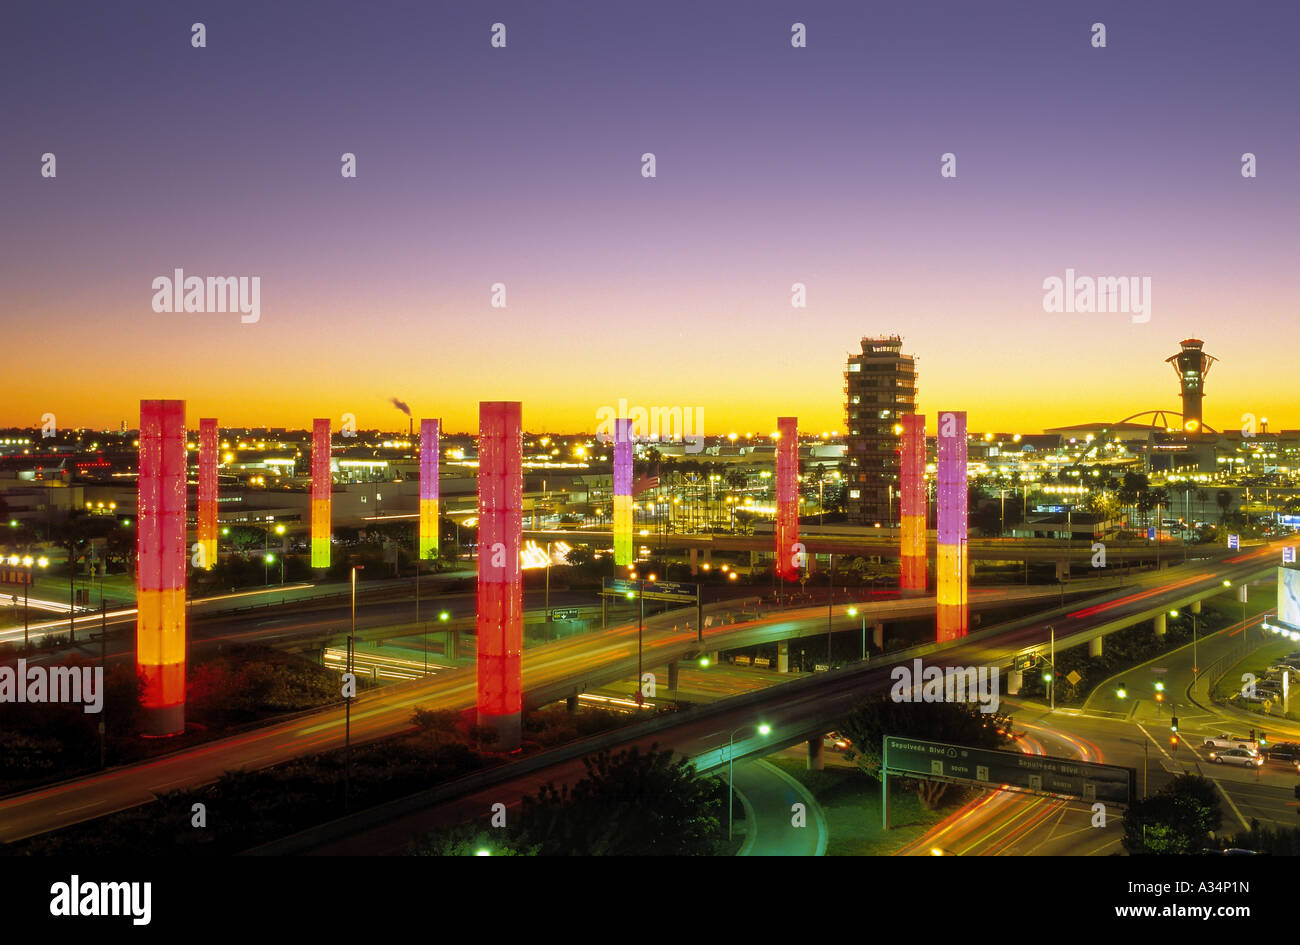 Colorful illuminated pylons form a decorative sight where Century Boulevard reaches Los Angeles International Airport, LAX Stock Photo